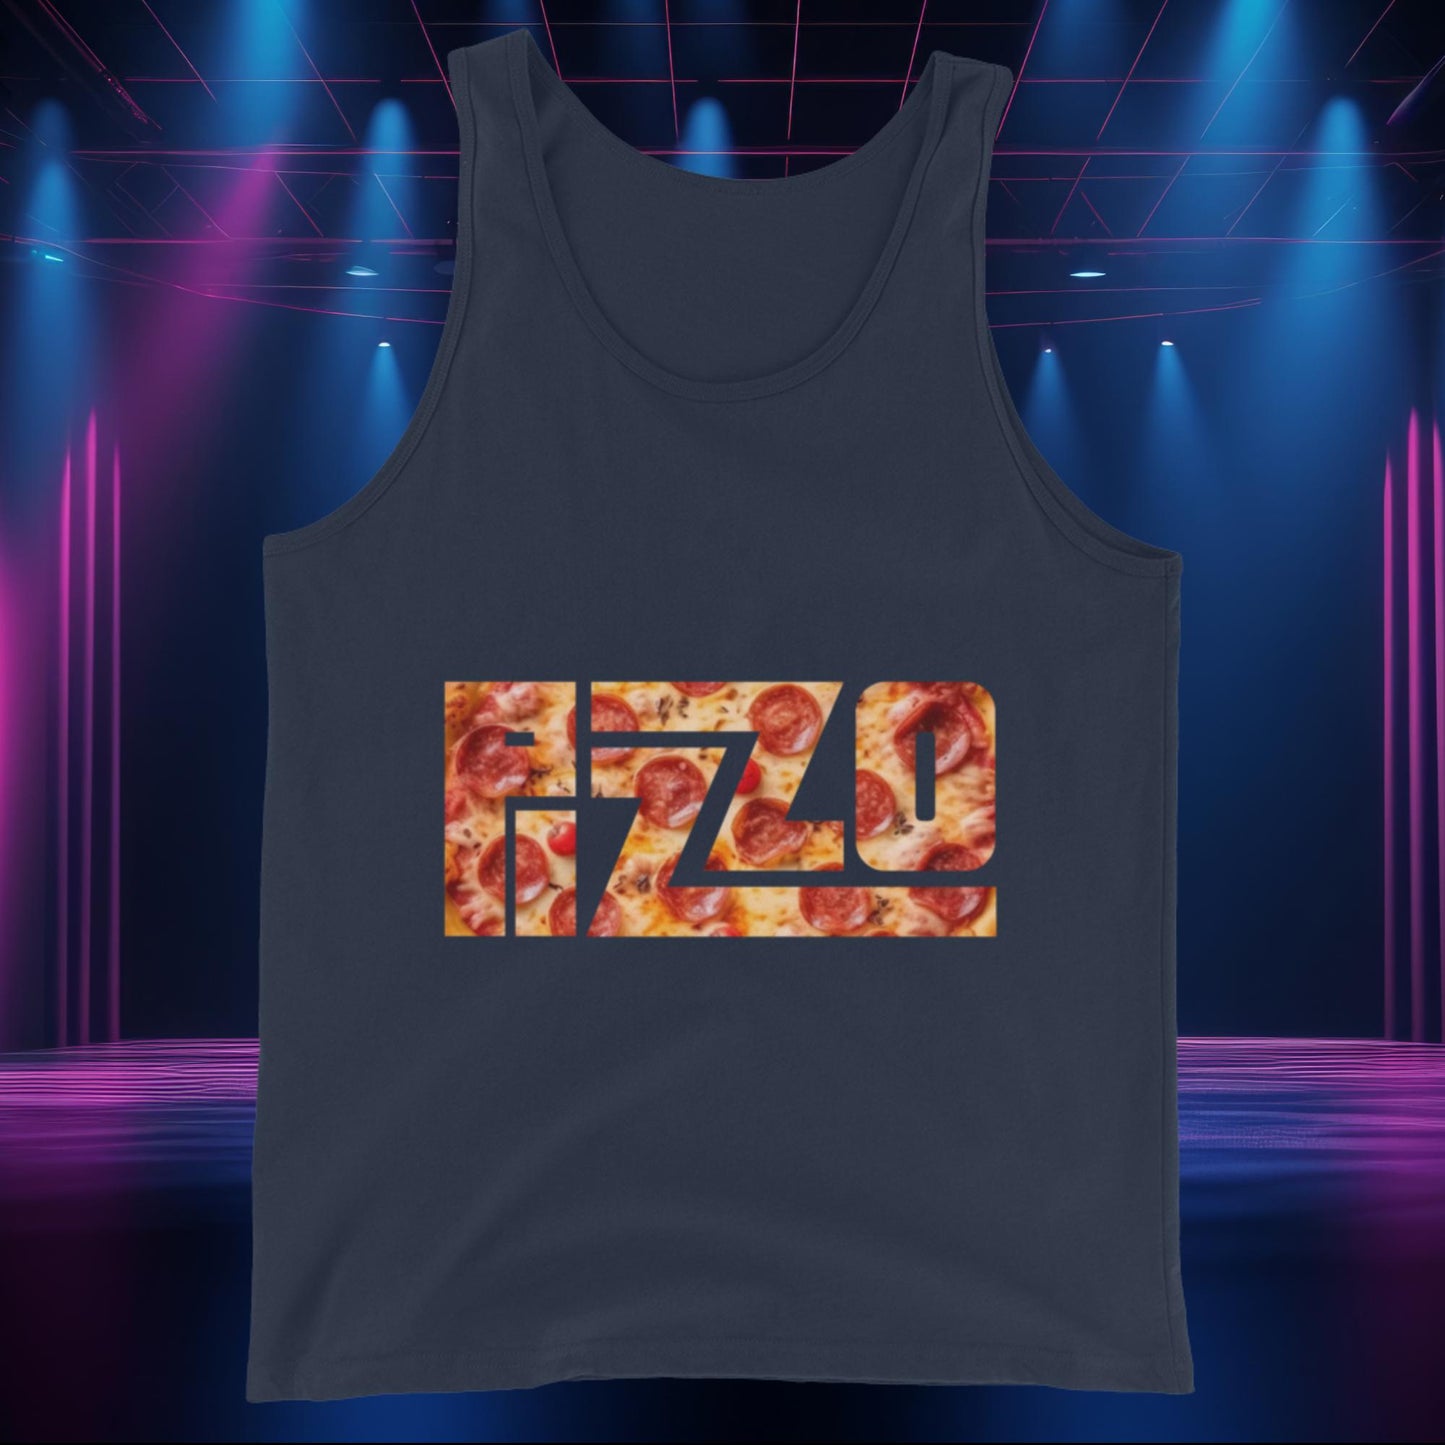 Pizzo Logo Lizzo Pizza Lizzo Merch Lizzo Gift Body Positivity Body empowerment Lizzo Tank Top Next Cult Brand